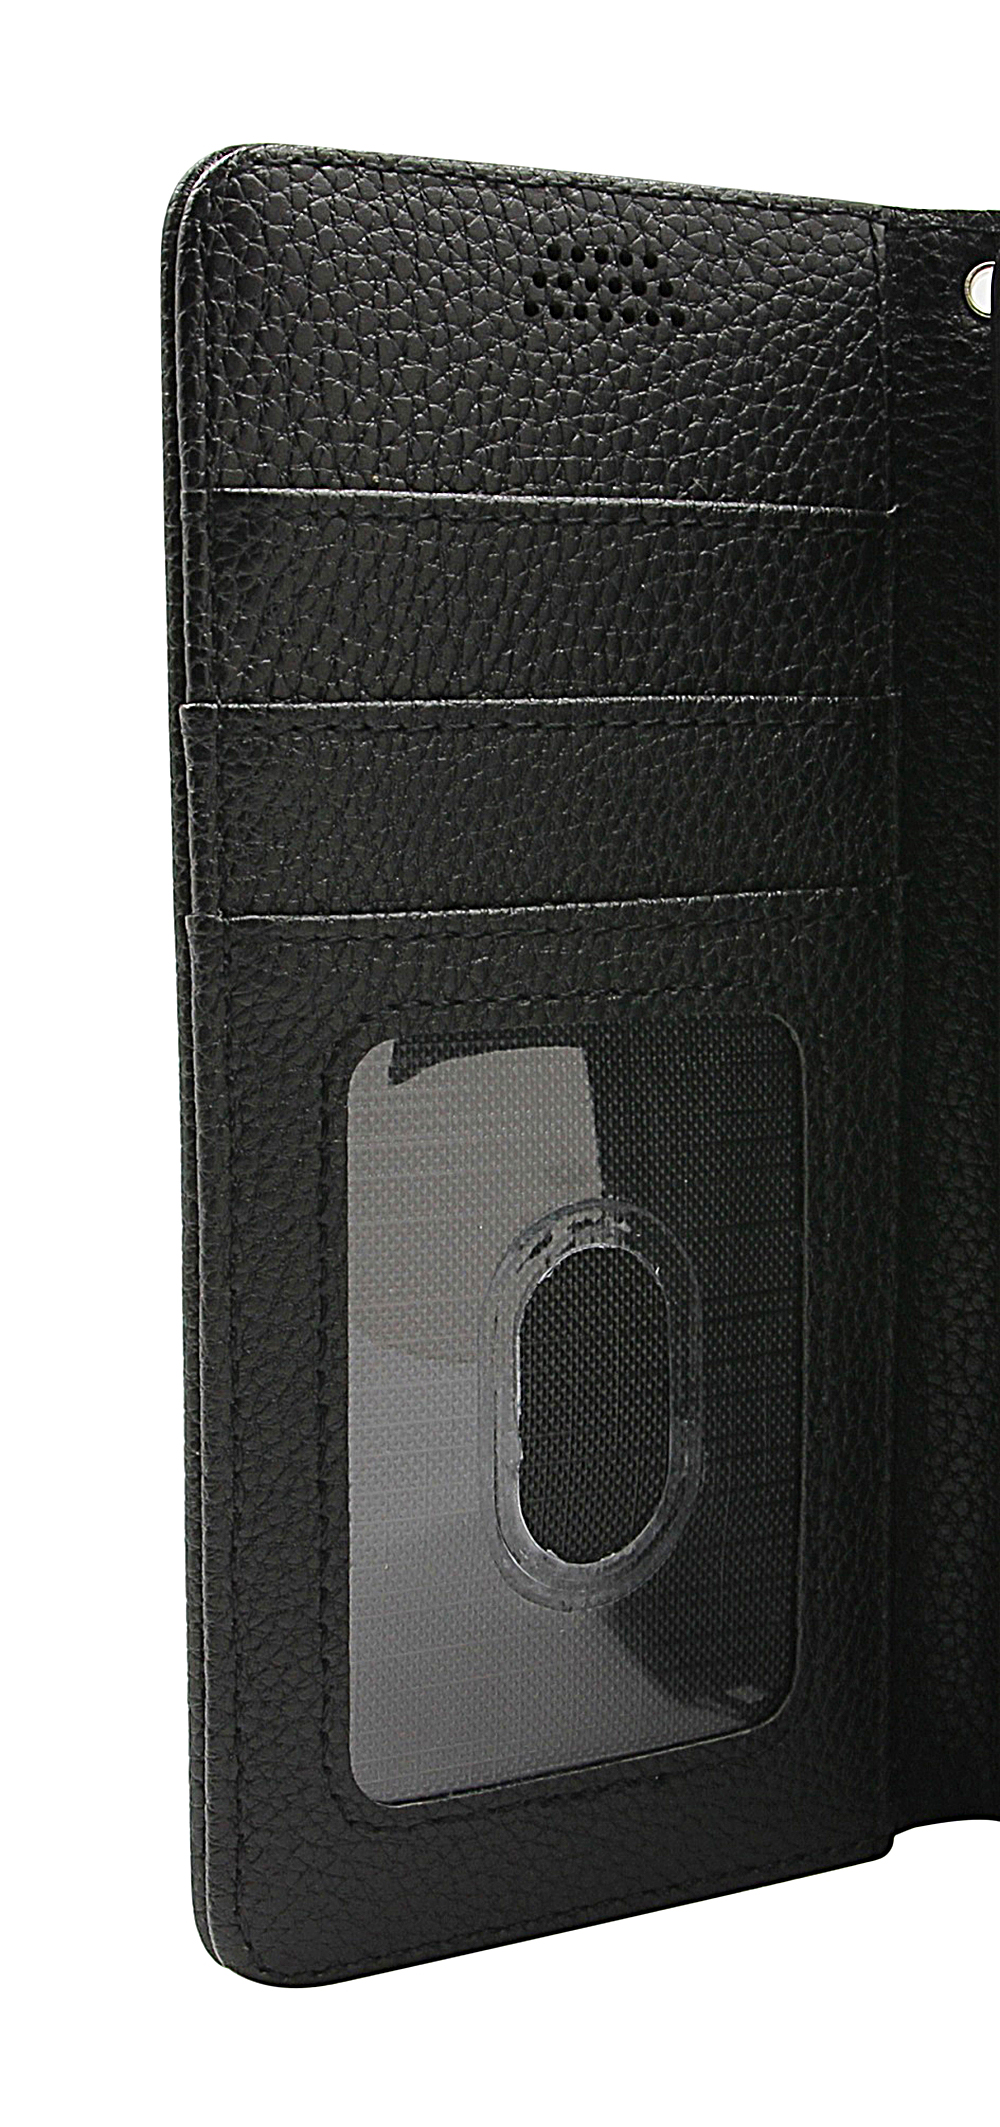 New Standcase Wallet Sony Xperia E5 (F3311)